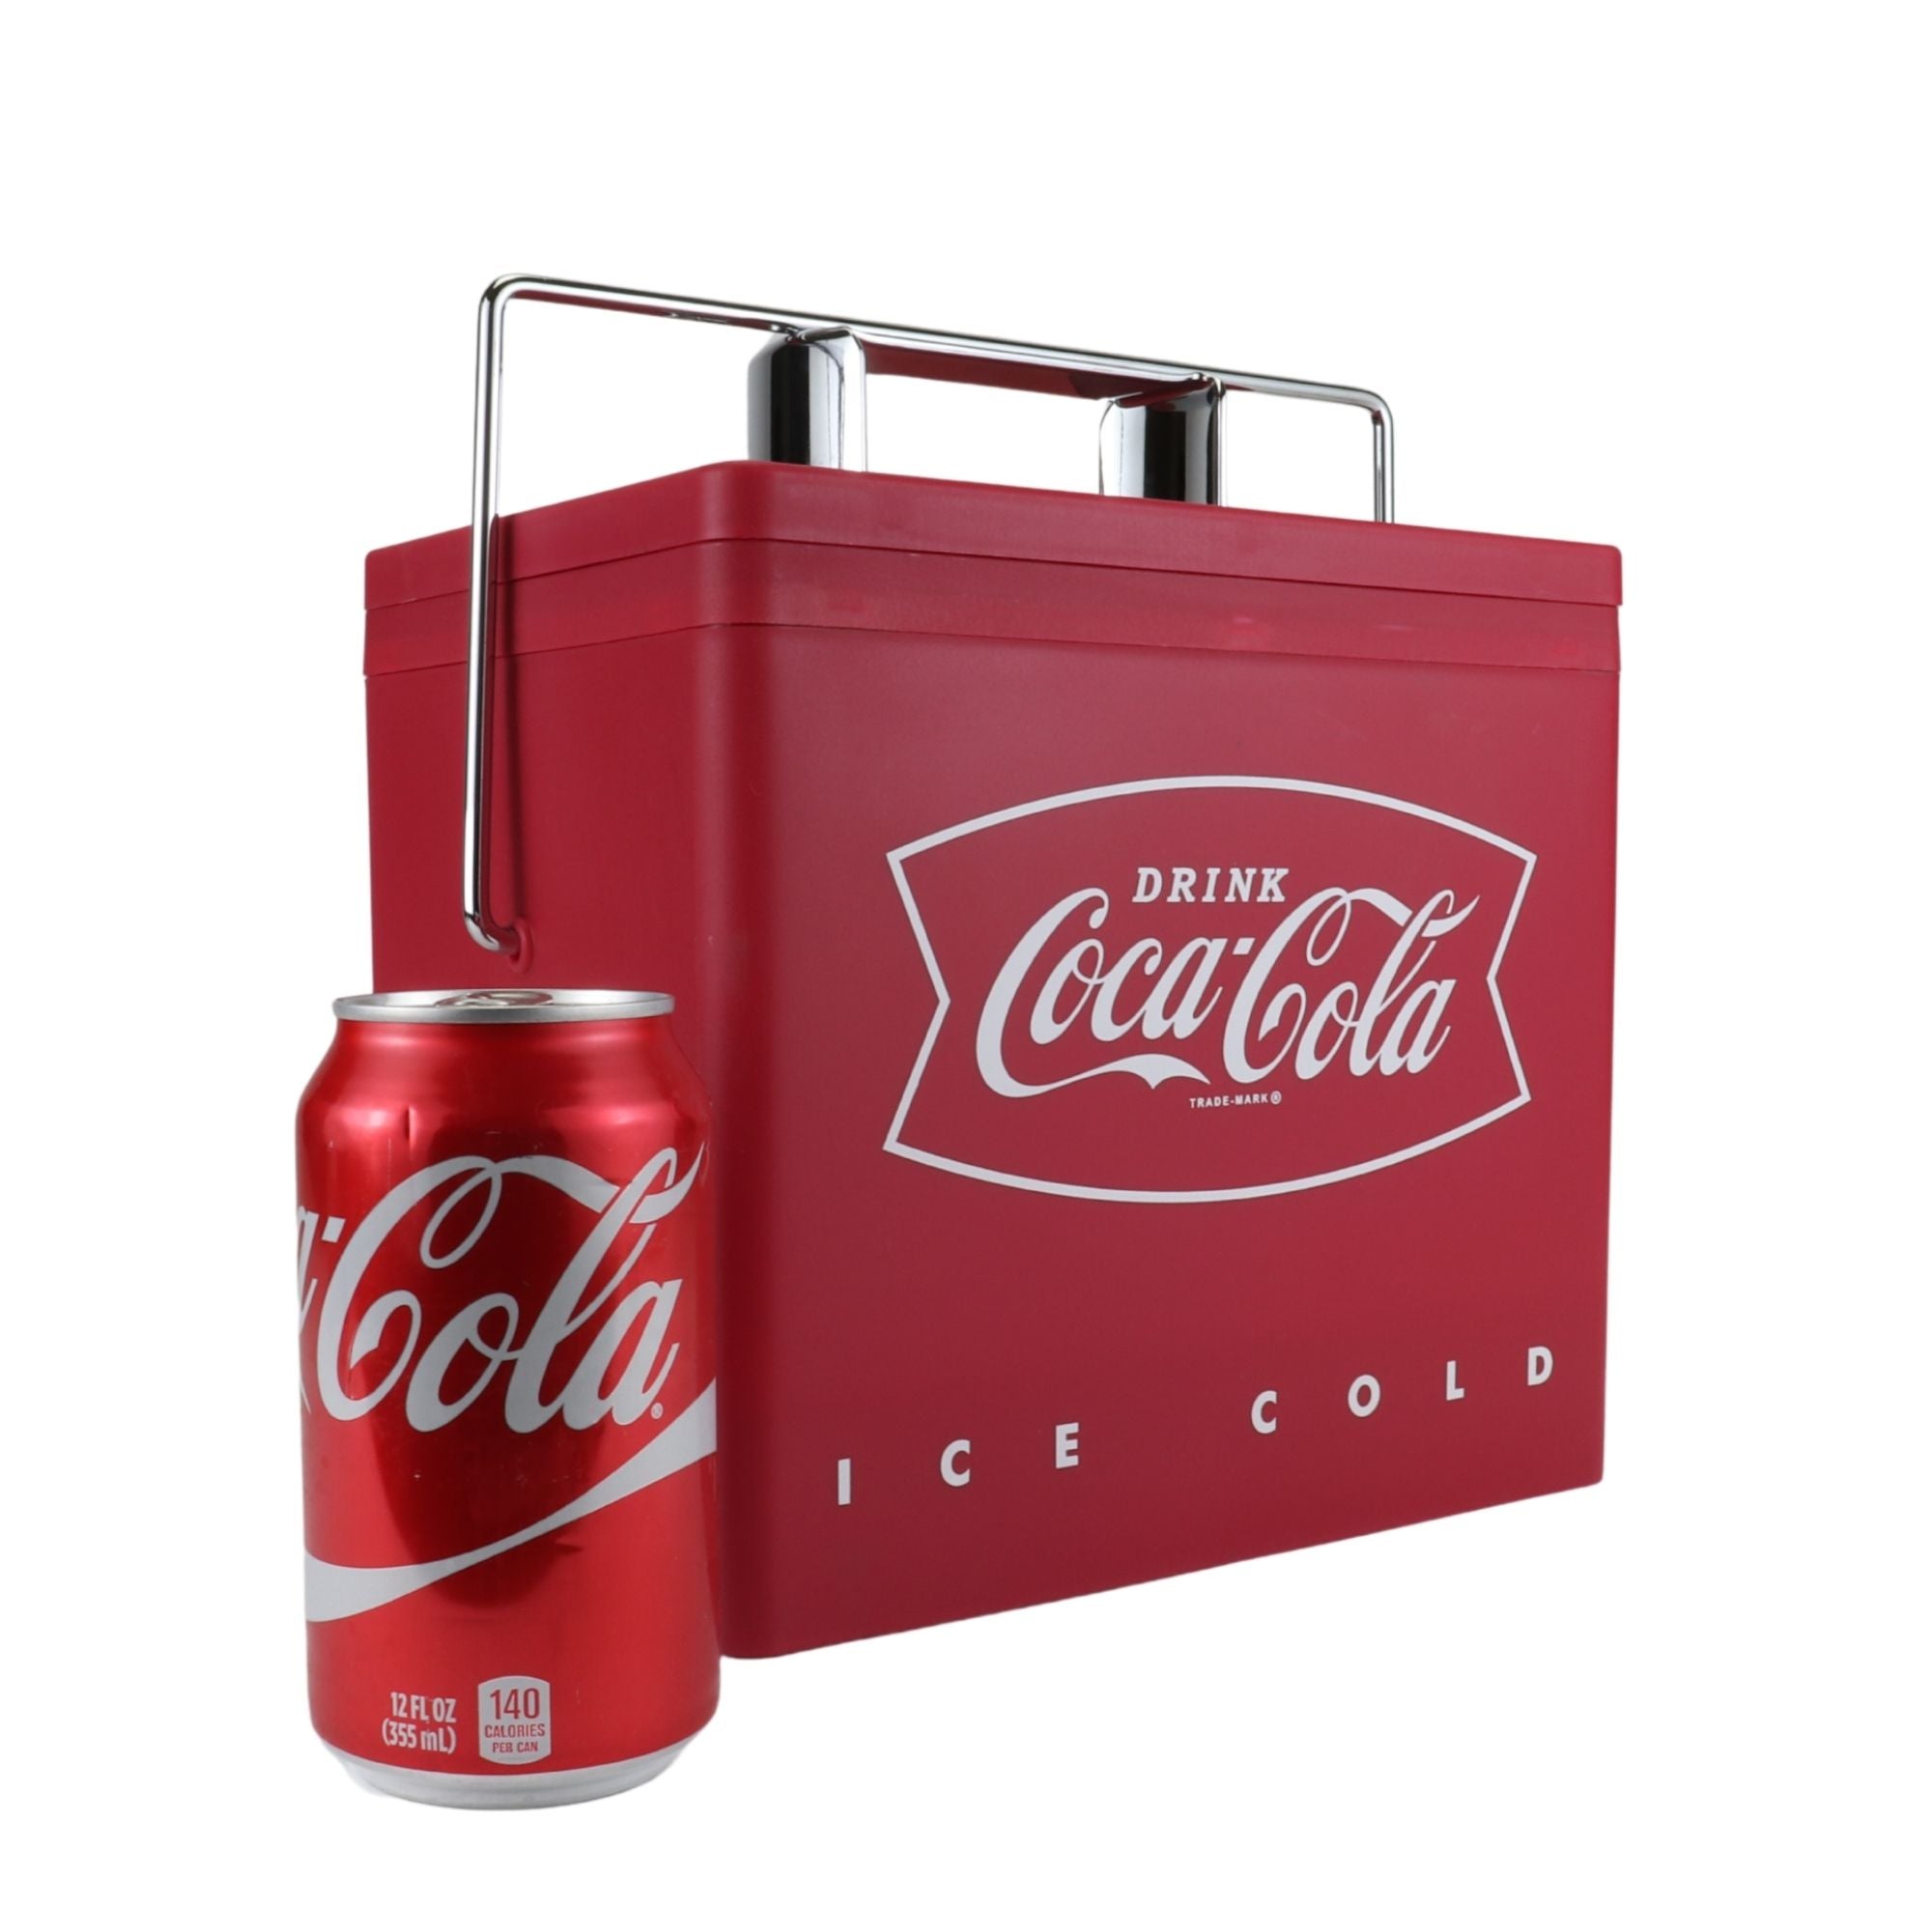 Vintage Ice Cold Coca Cola Sold Here Insert set of 4 Plastic Table Coasters  Conimar Corp Retro Coca-Cola Coke Advertisement Memorabilia